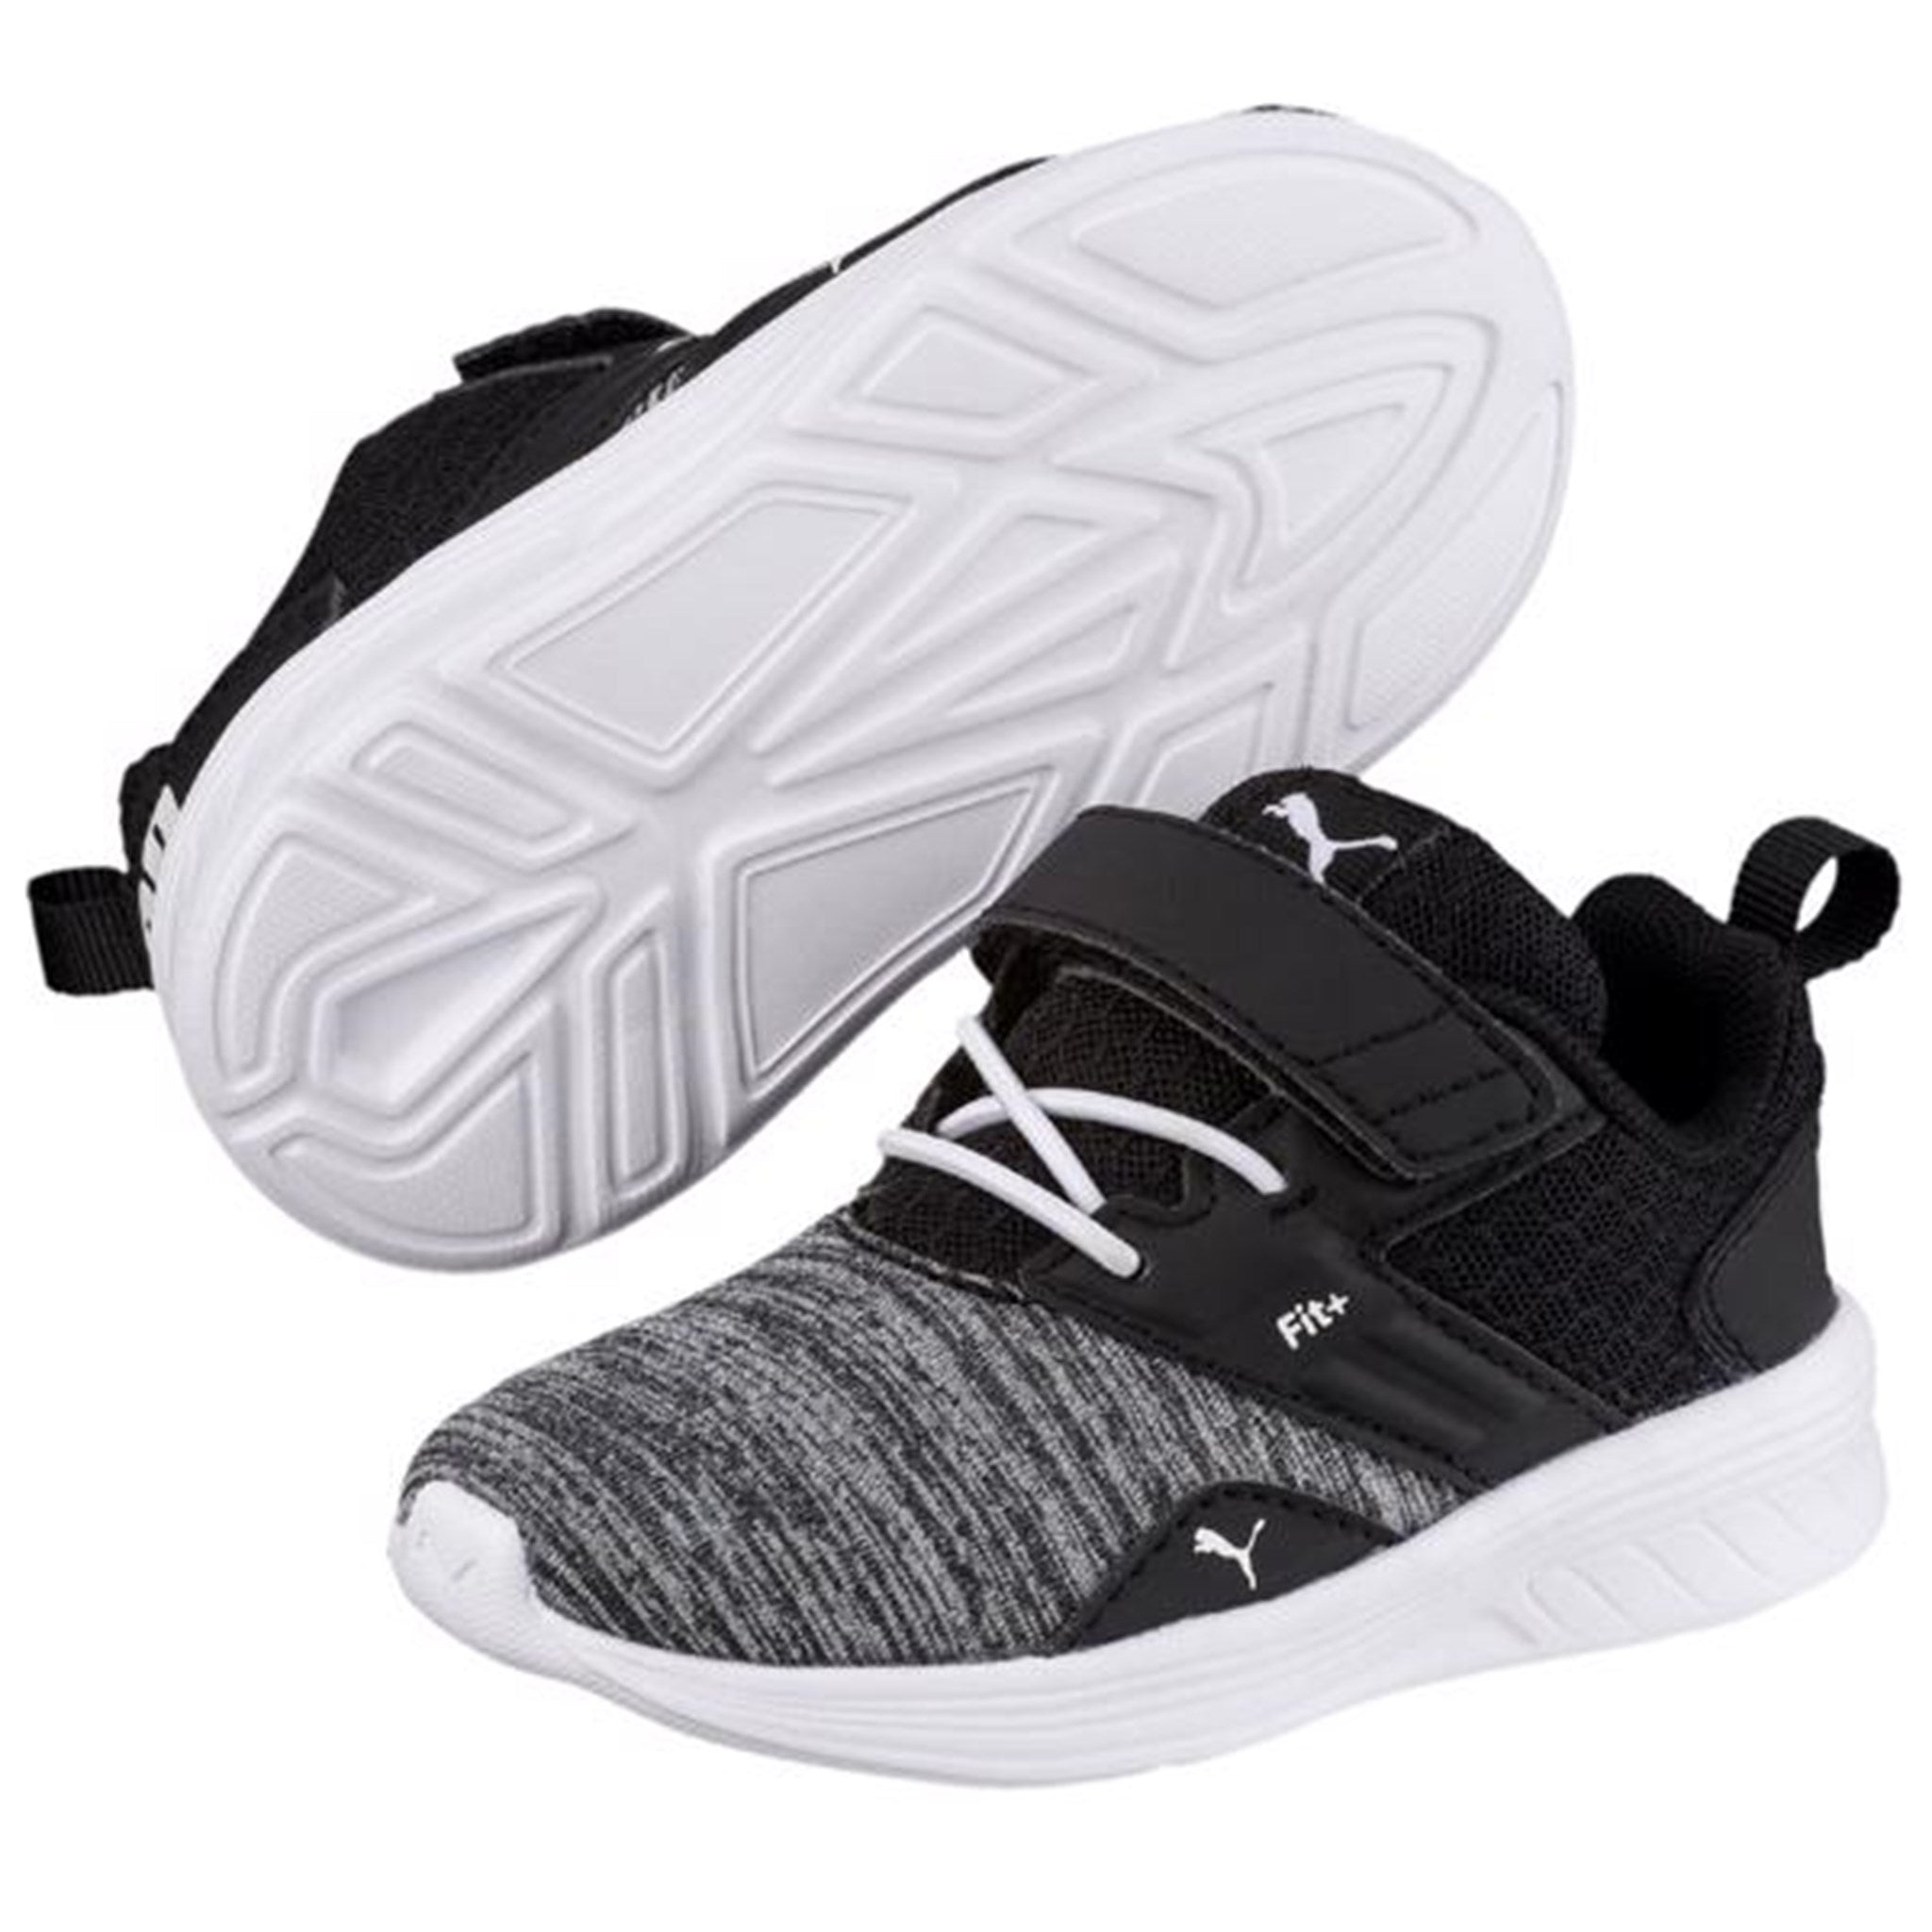 Puma Comet V Infant Sneakers White/Black